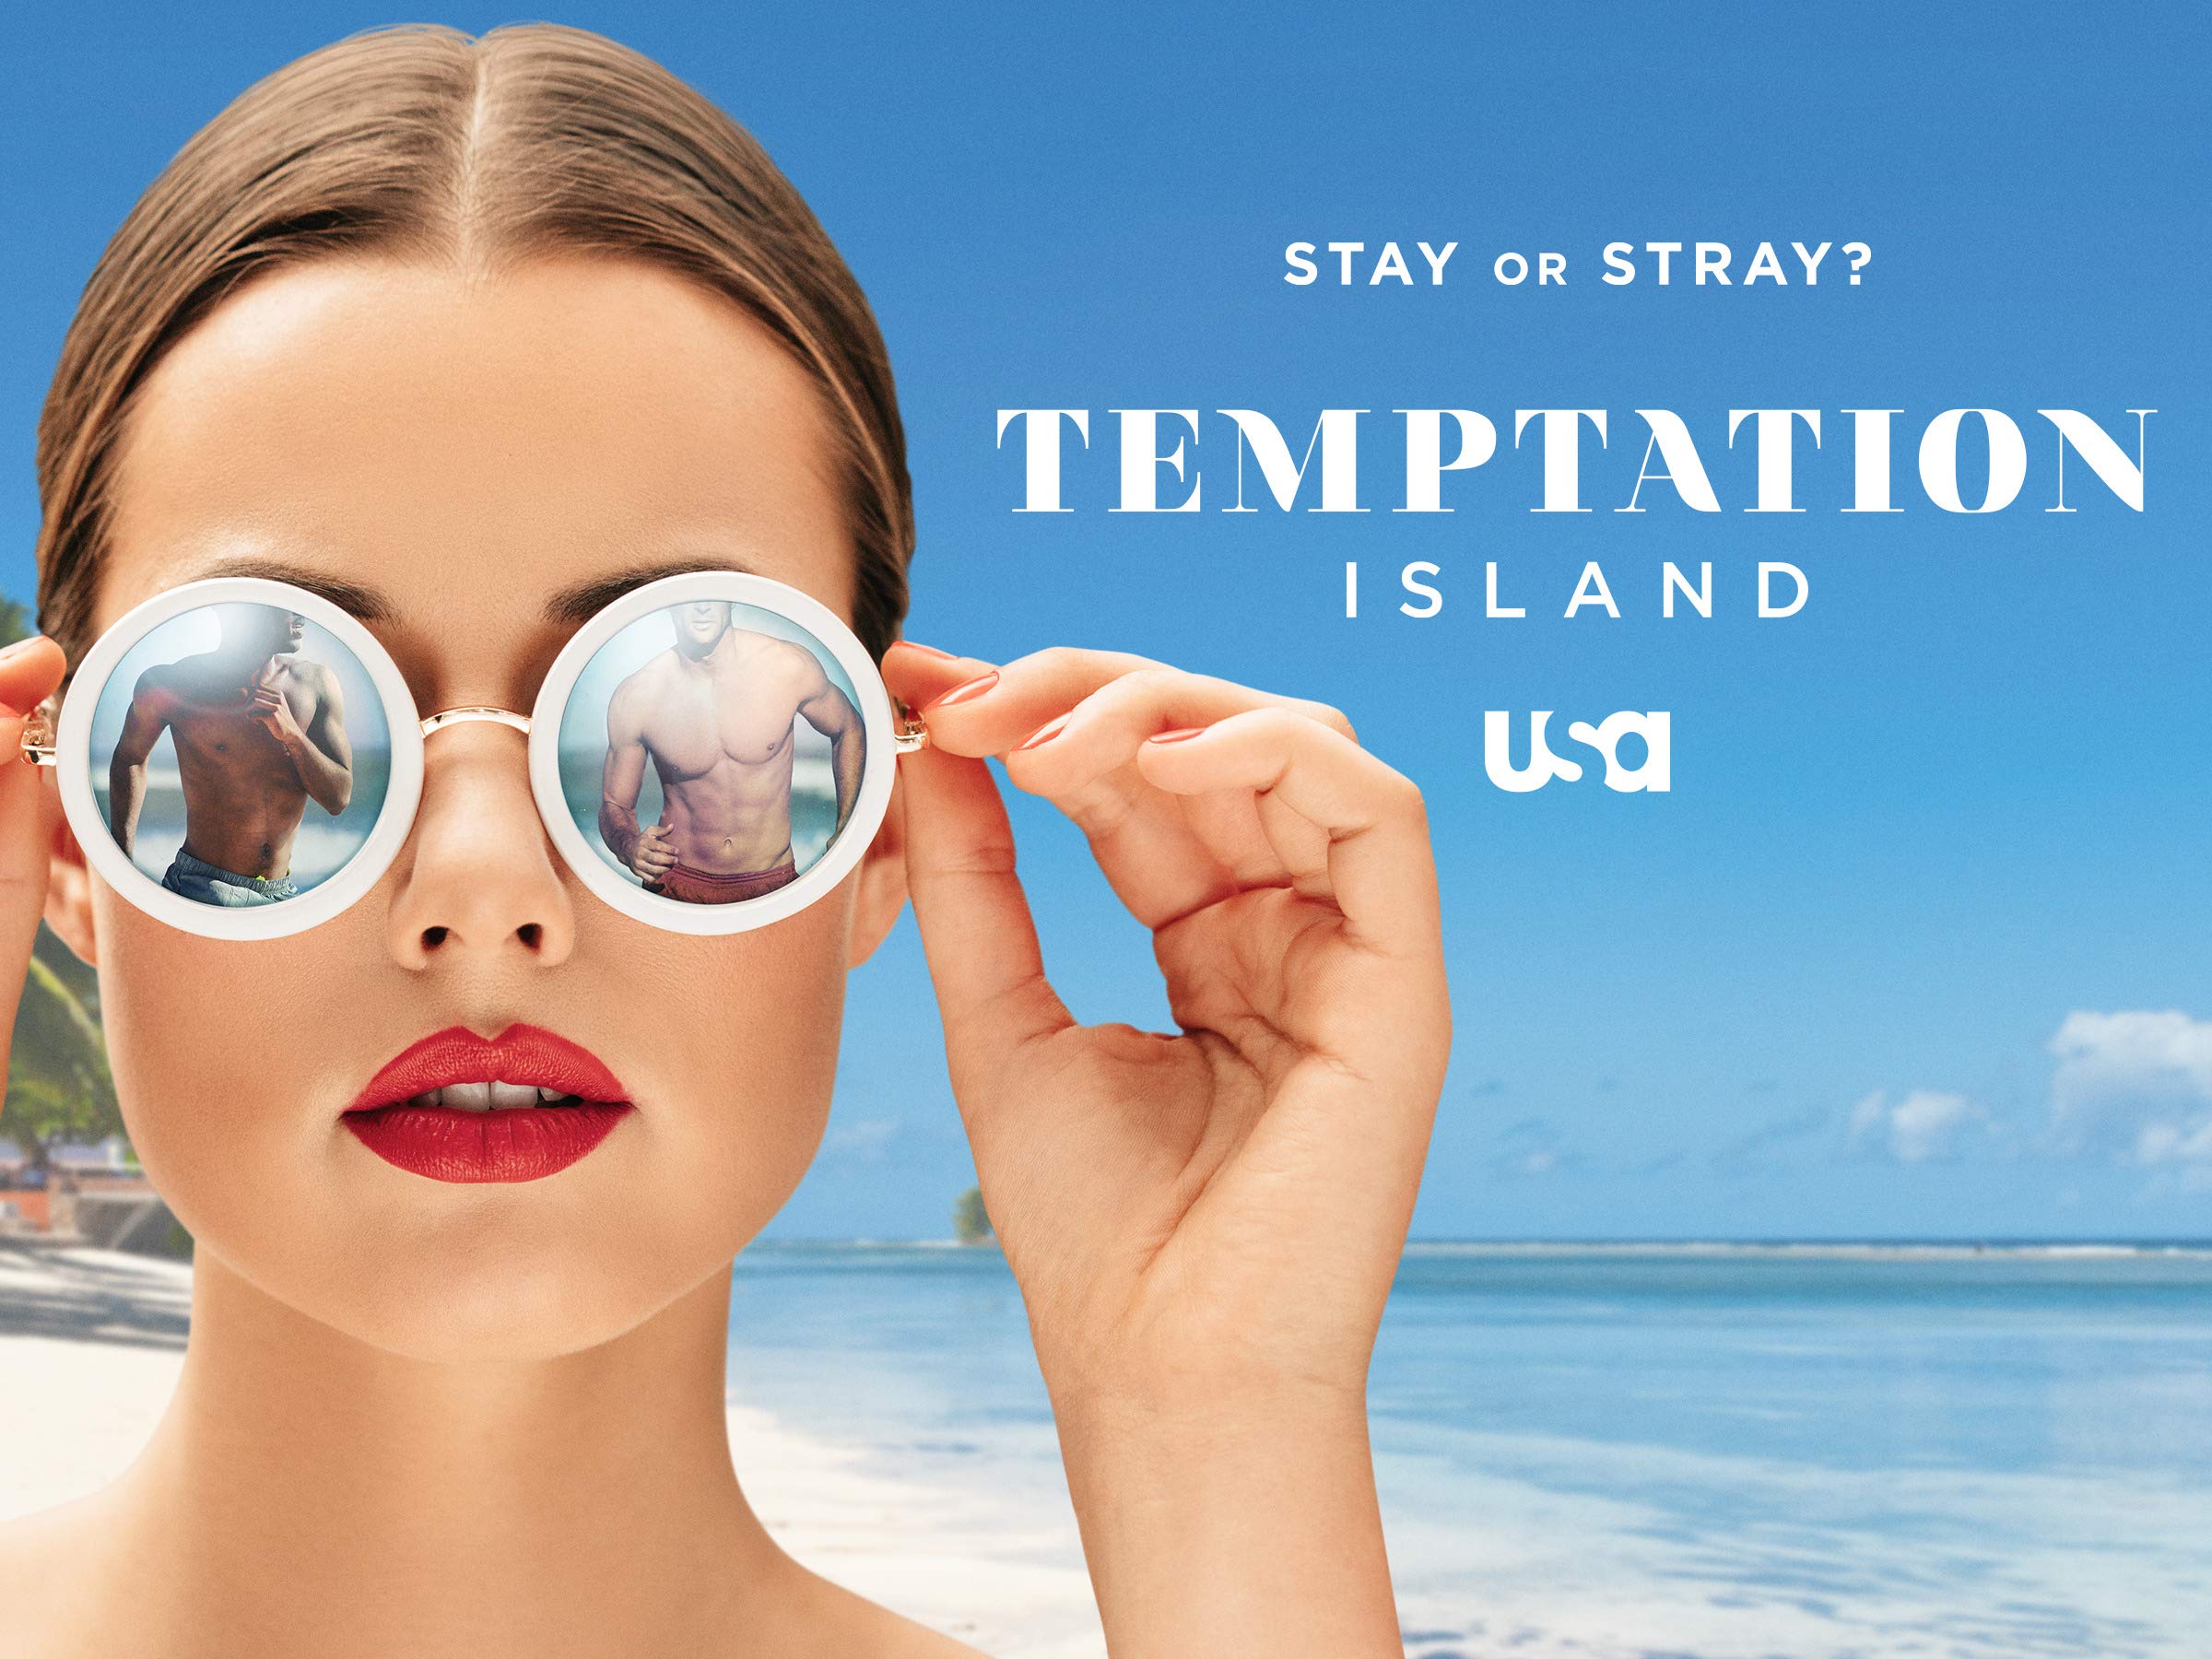 Temptation Island poster